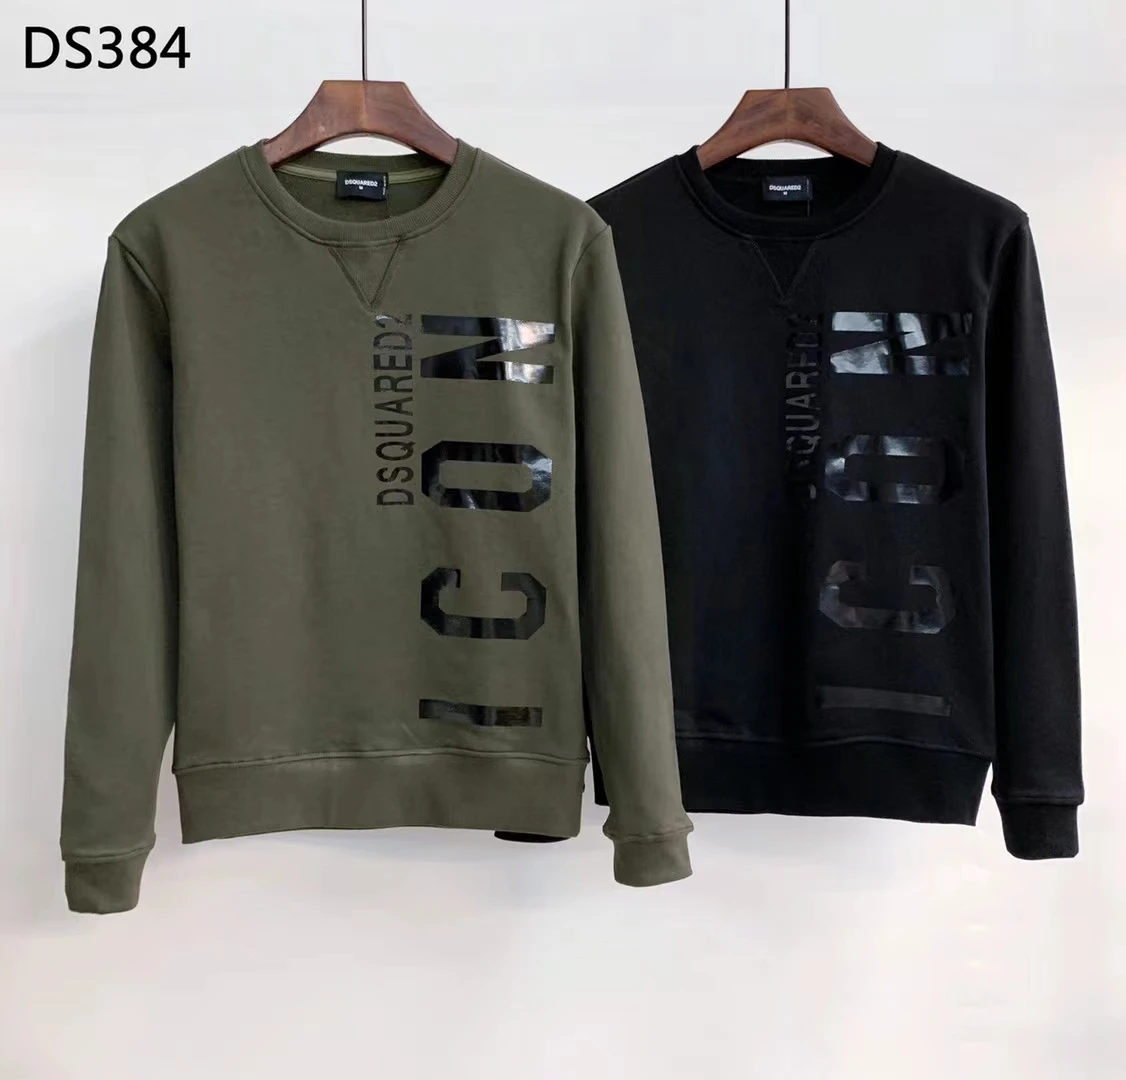 

2021 New Dsquared2 Italian Fashion Brand Men's Premium Printed Casual Sweater DS384